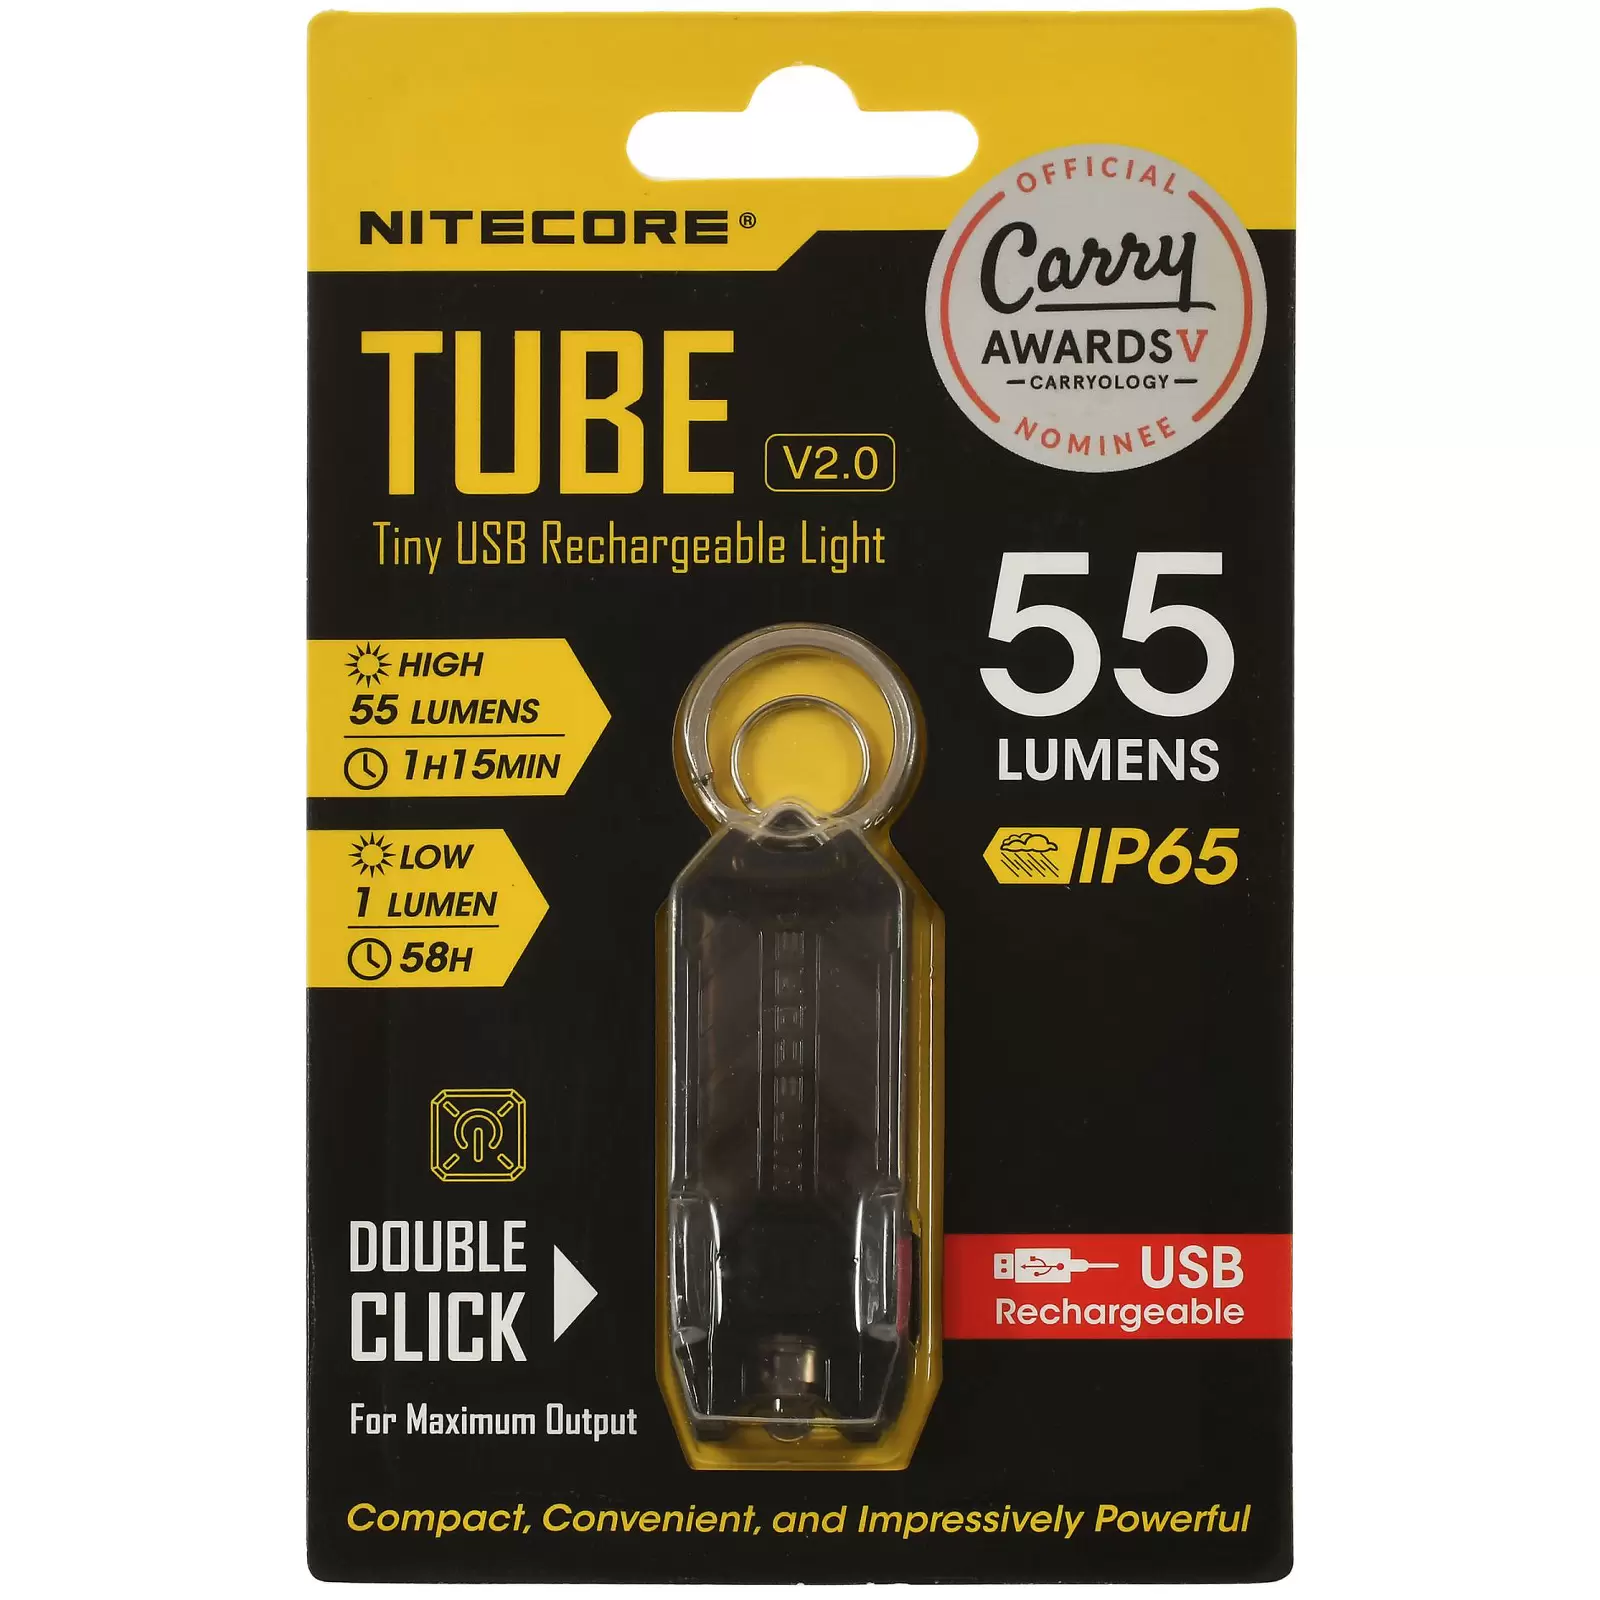 Nitecore TUBE 2.0 Mini LED Taschenlampe, mit Micro USB, 55 Lumen